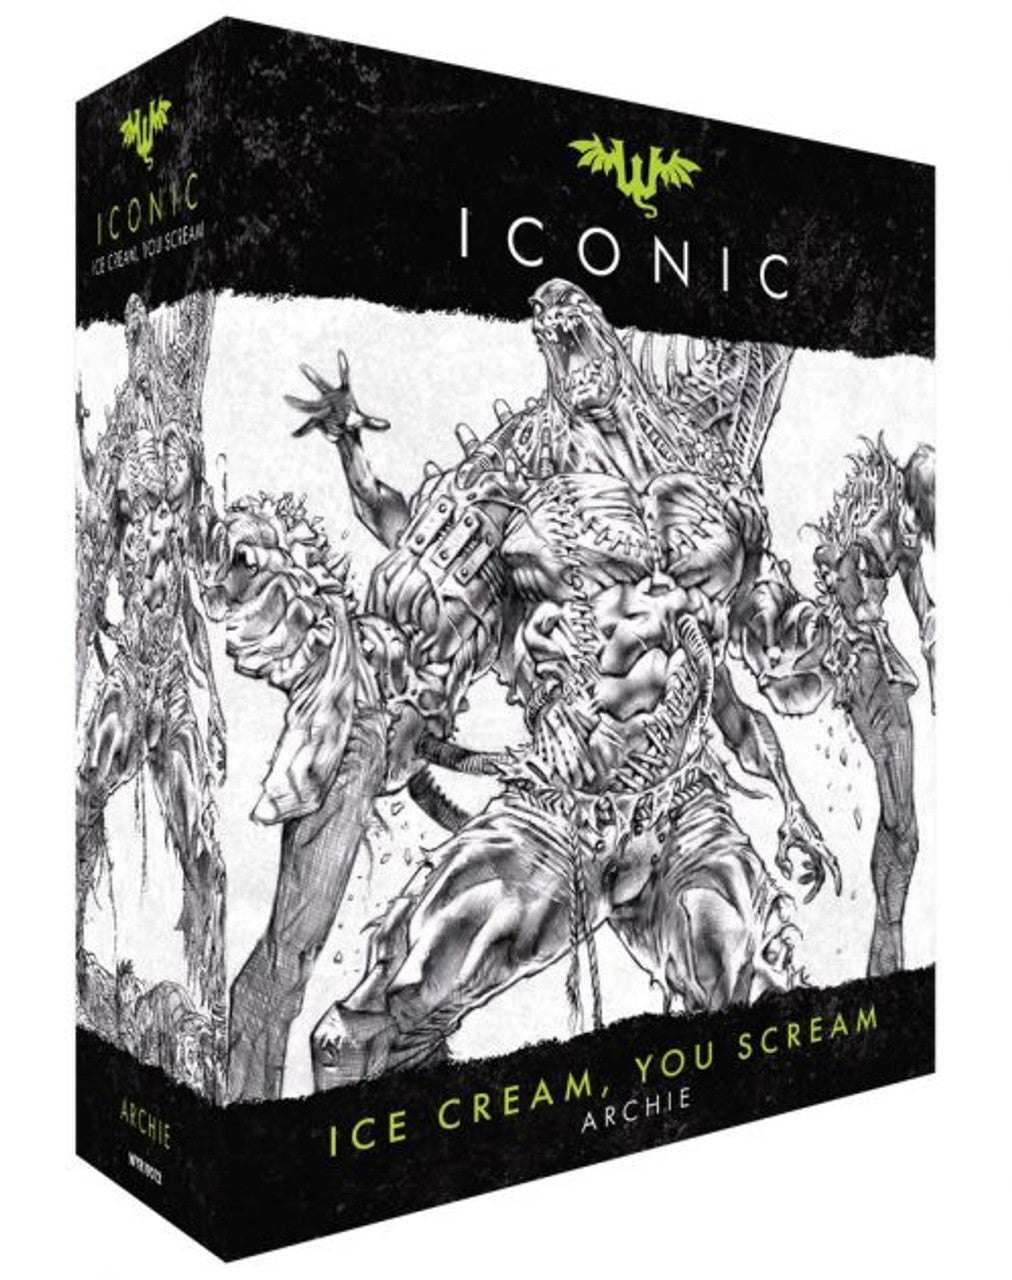 ICONIC: ICE CREAM, YOU SCREAM (ARCHIE)